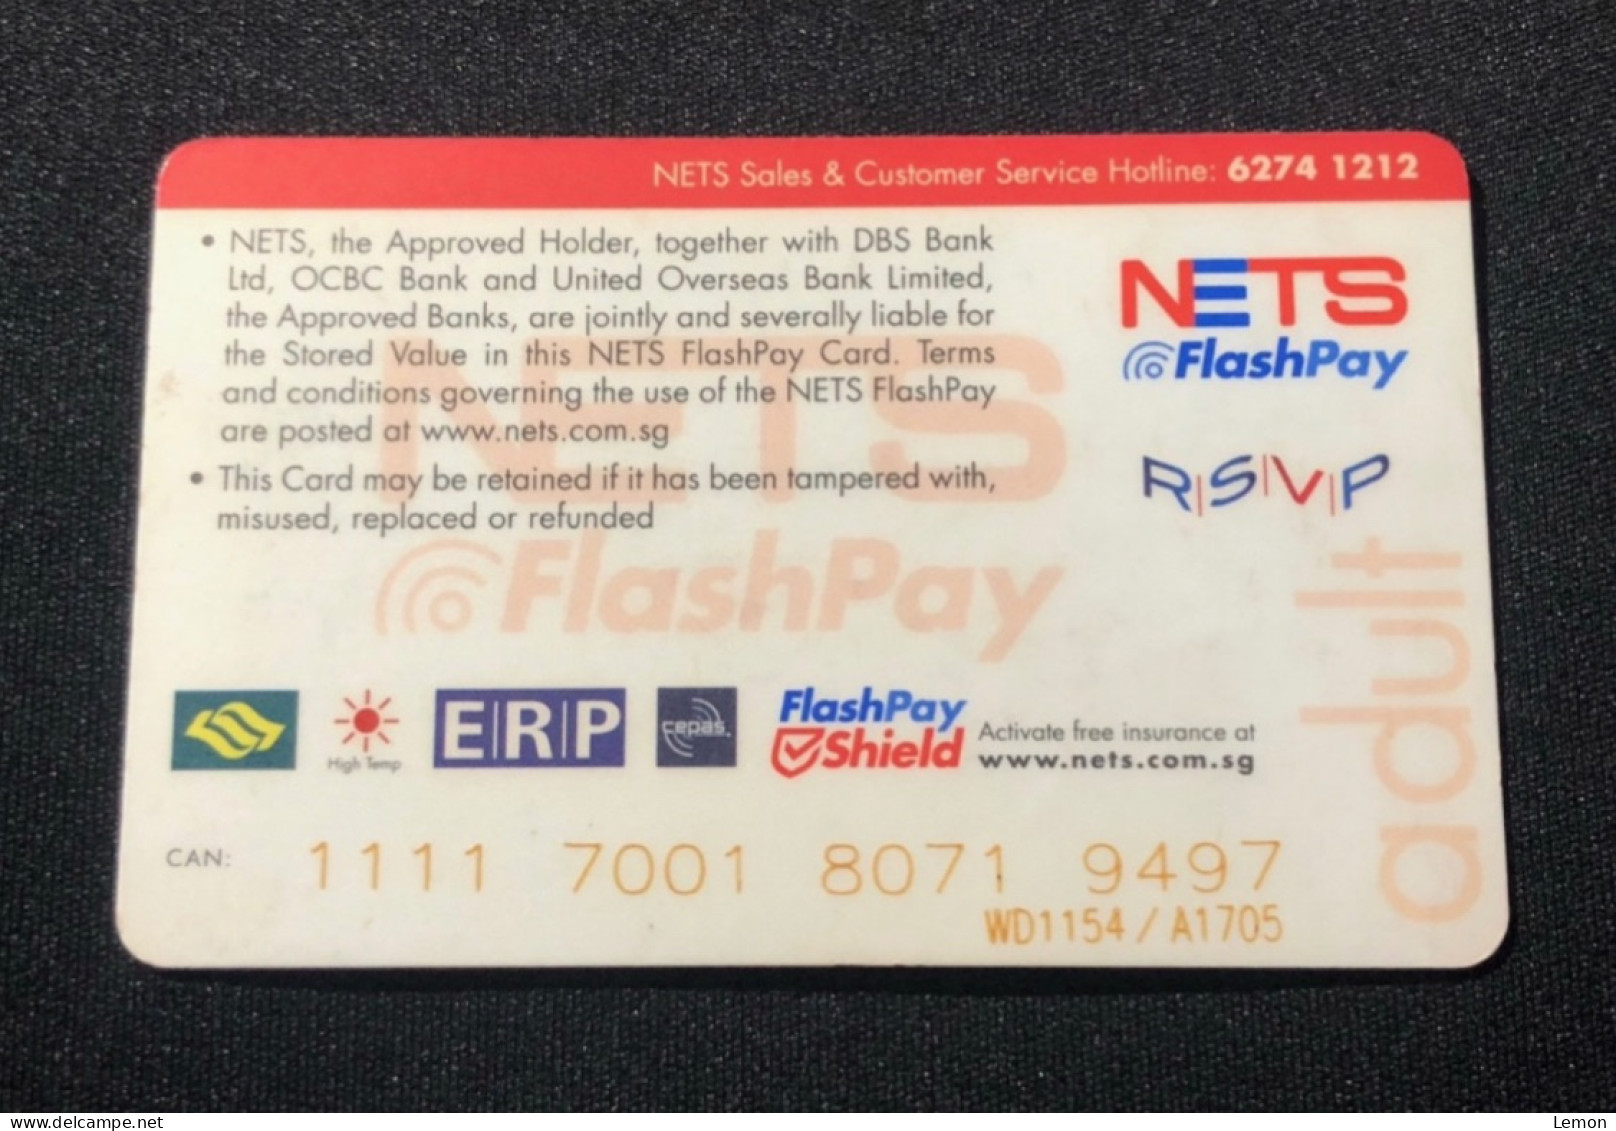 Singapore Nets Flashpay EZ Link Transport Metro Train Subway Card, SMRT 30 Years Silver, Set Of 1 Used Card - Singapore